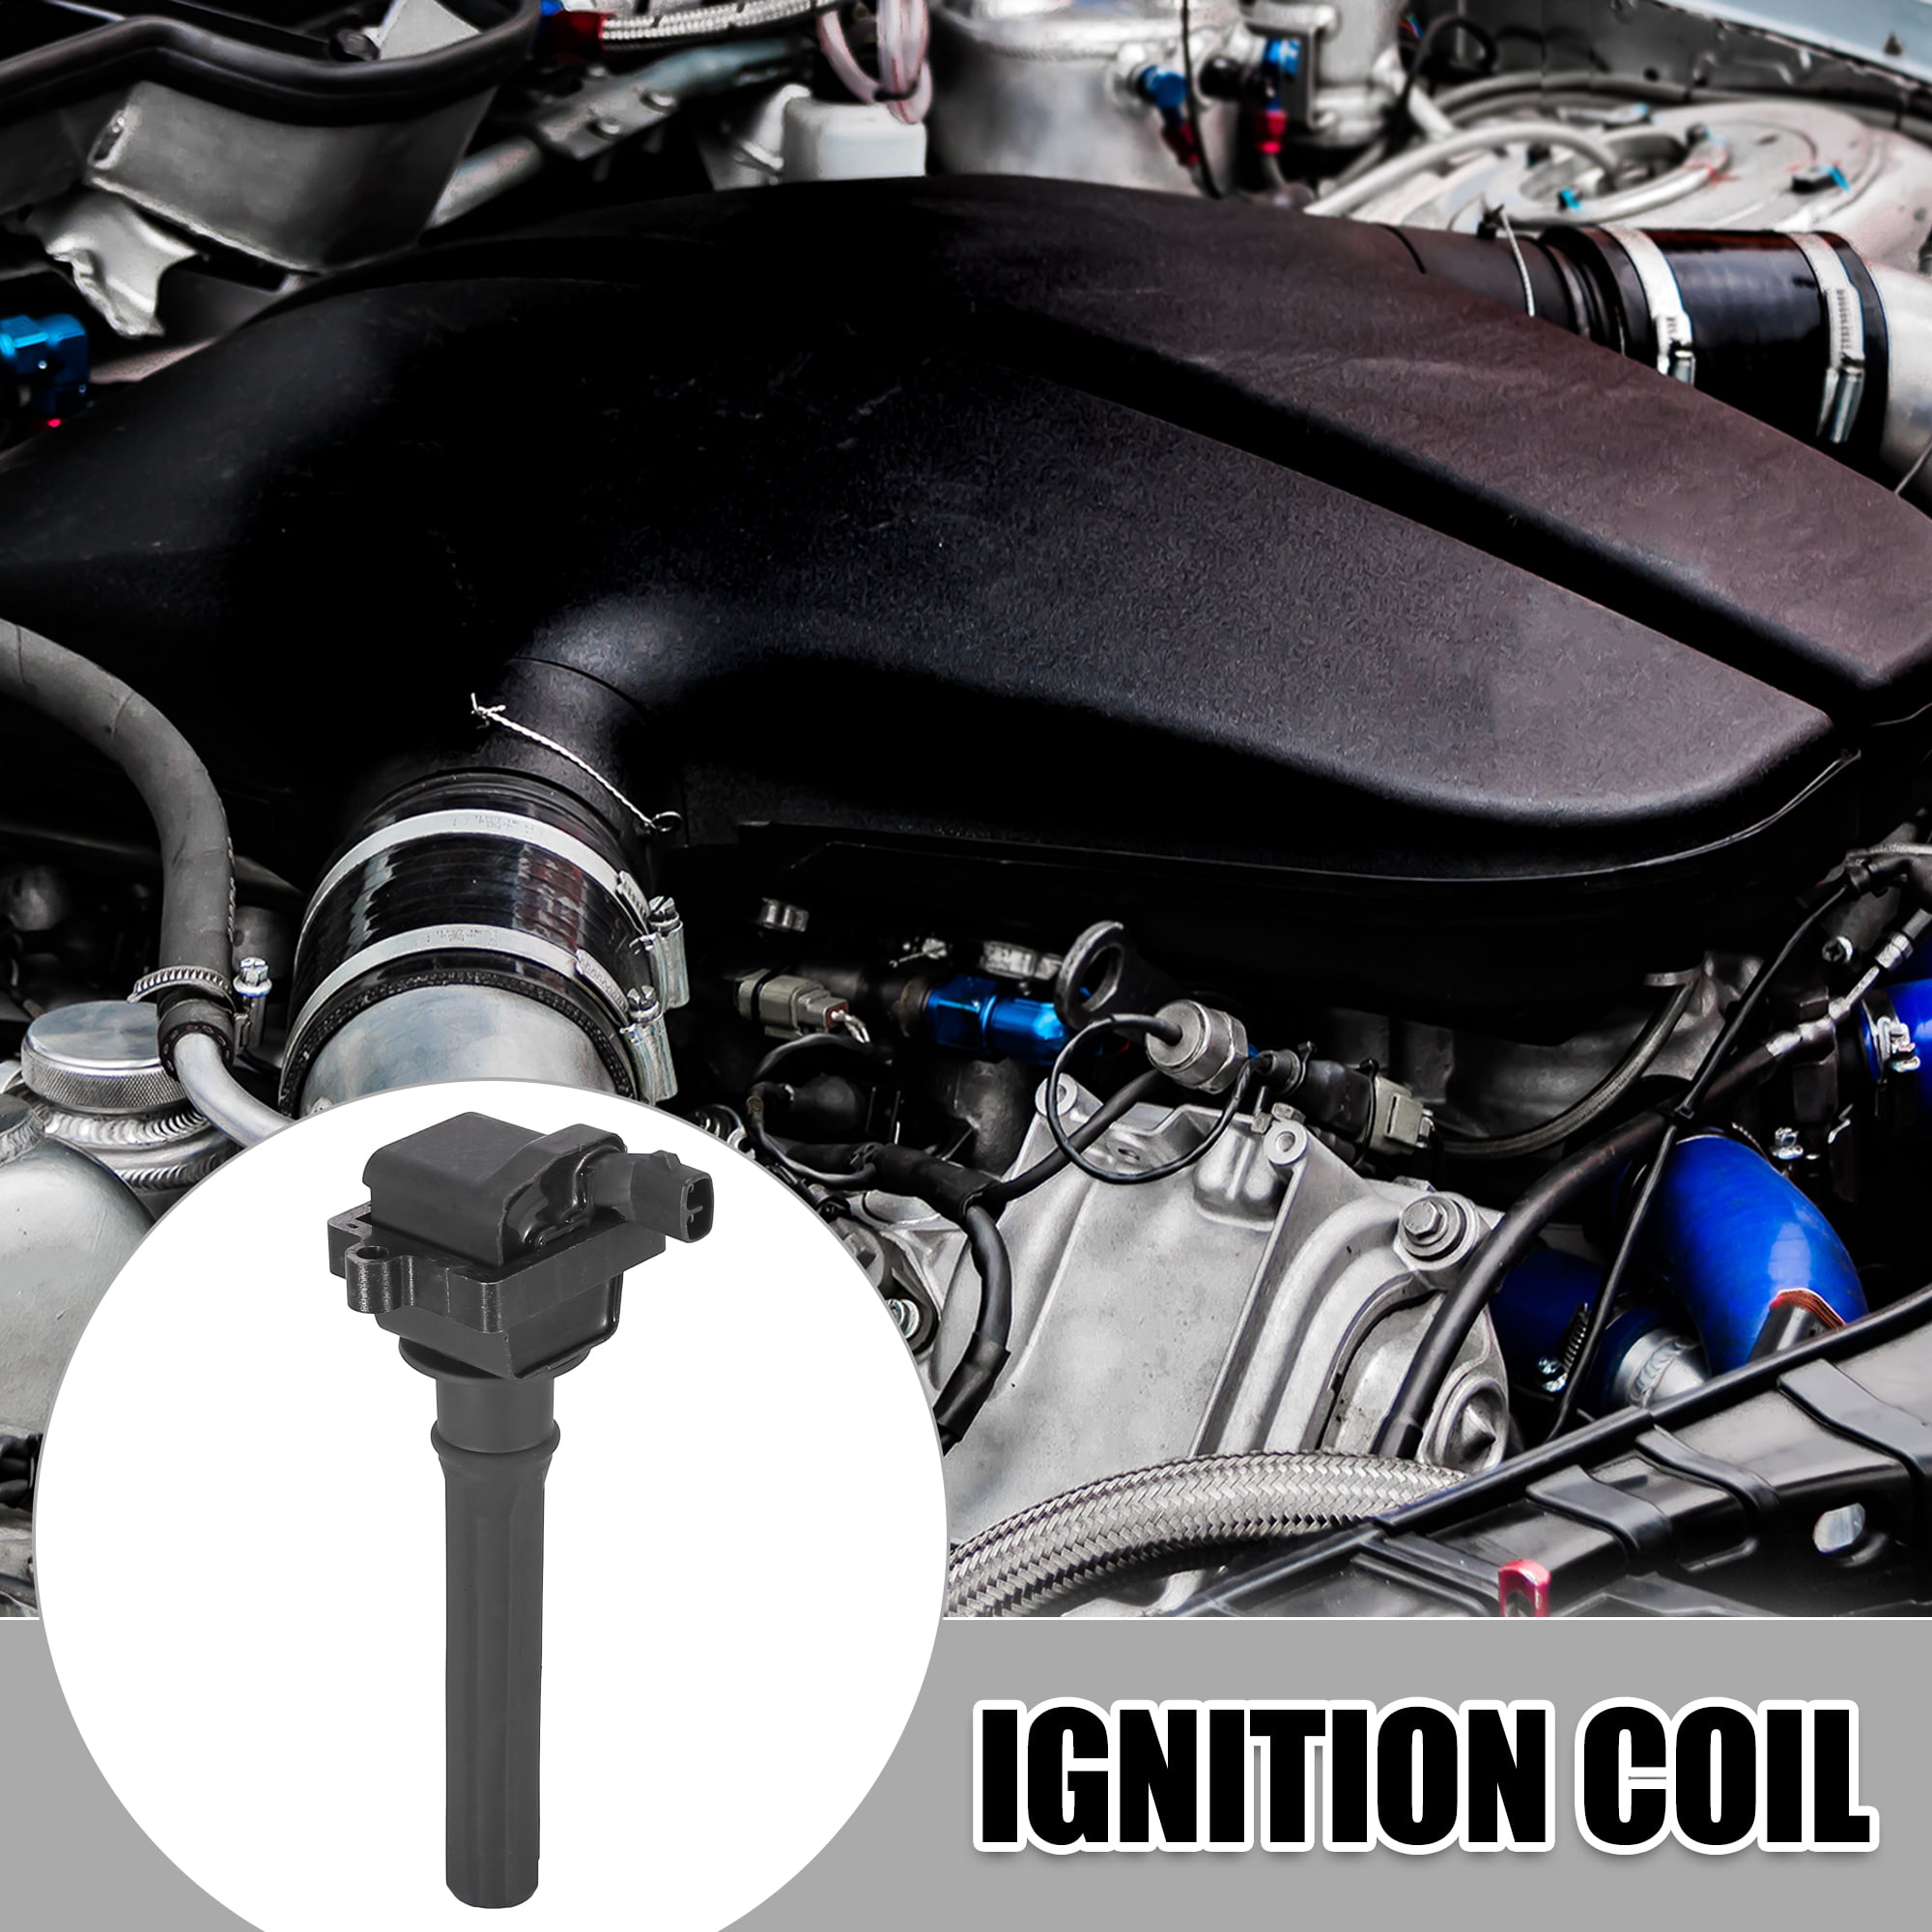 X AUTOHAUX Car Ignition Coil Engine Ignition Coil Replacement for Dodge Intrepid Magnum for Chrysler Sebring Concorde 04609095AF 